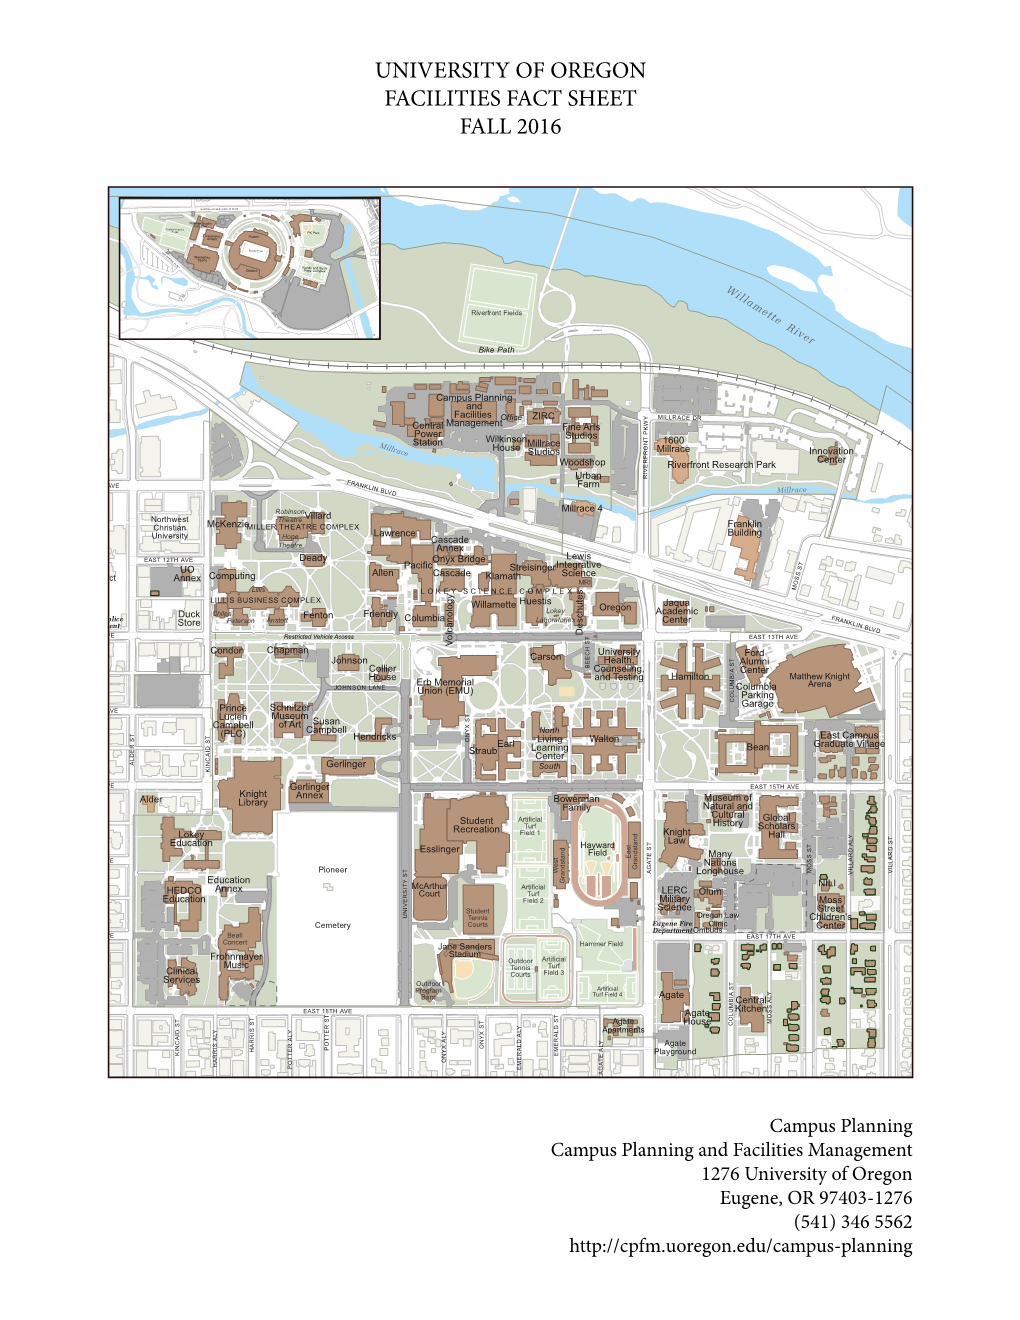 UNIVERSITY of OREGON FACILITIES FACT SHEET FALL 2016 UNIVERSITY of OREGON Campus Map 2016 for the Use of Campus Planning and Facilities Management